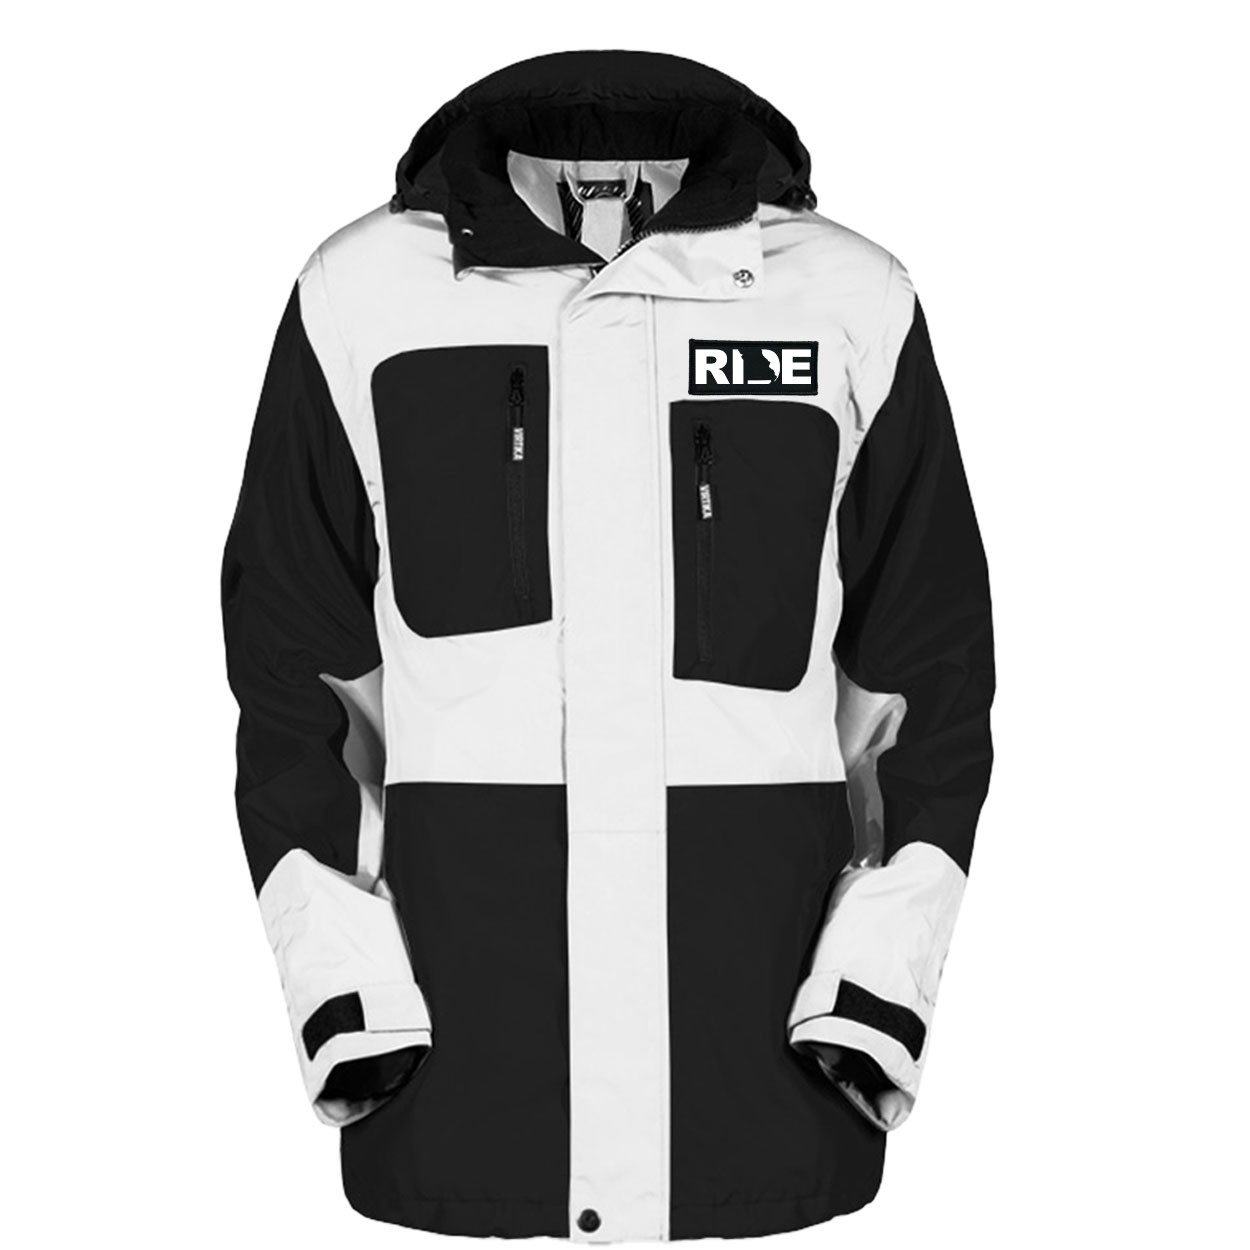 Ride Missouri Classic Woven Patch Pro Snowboard Jacket (Black/White)